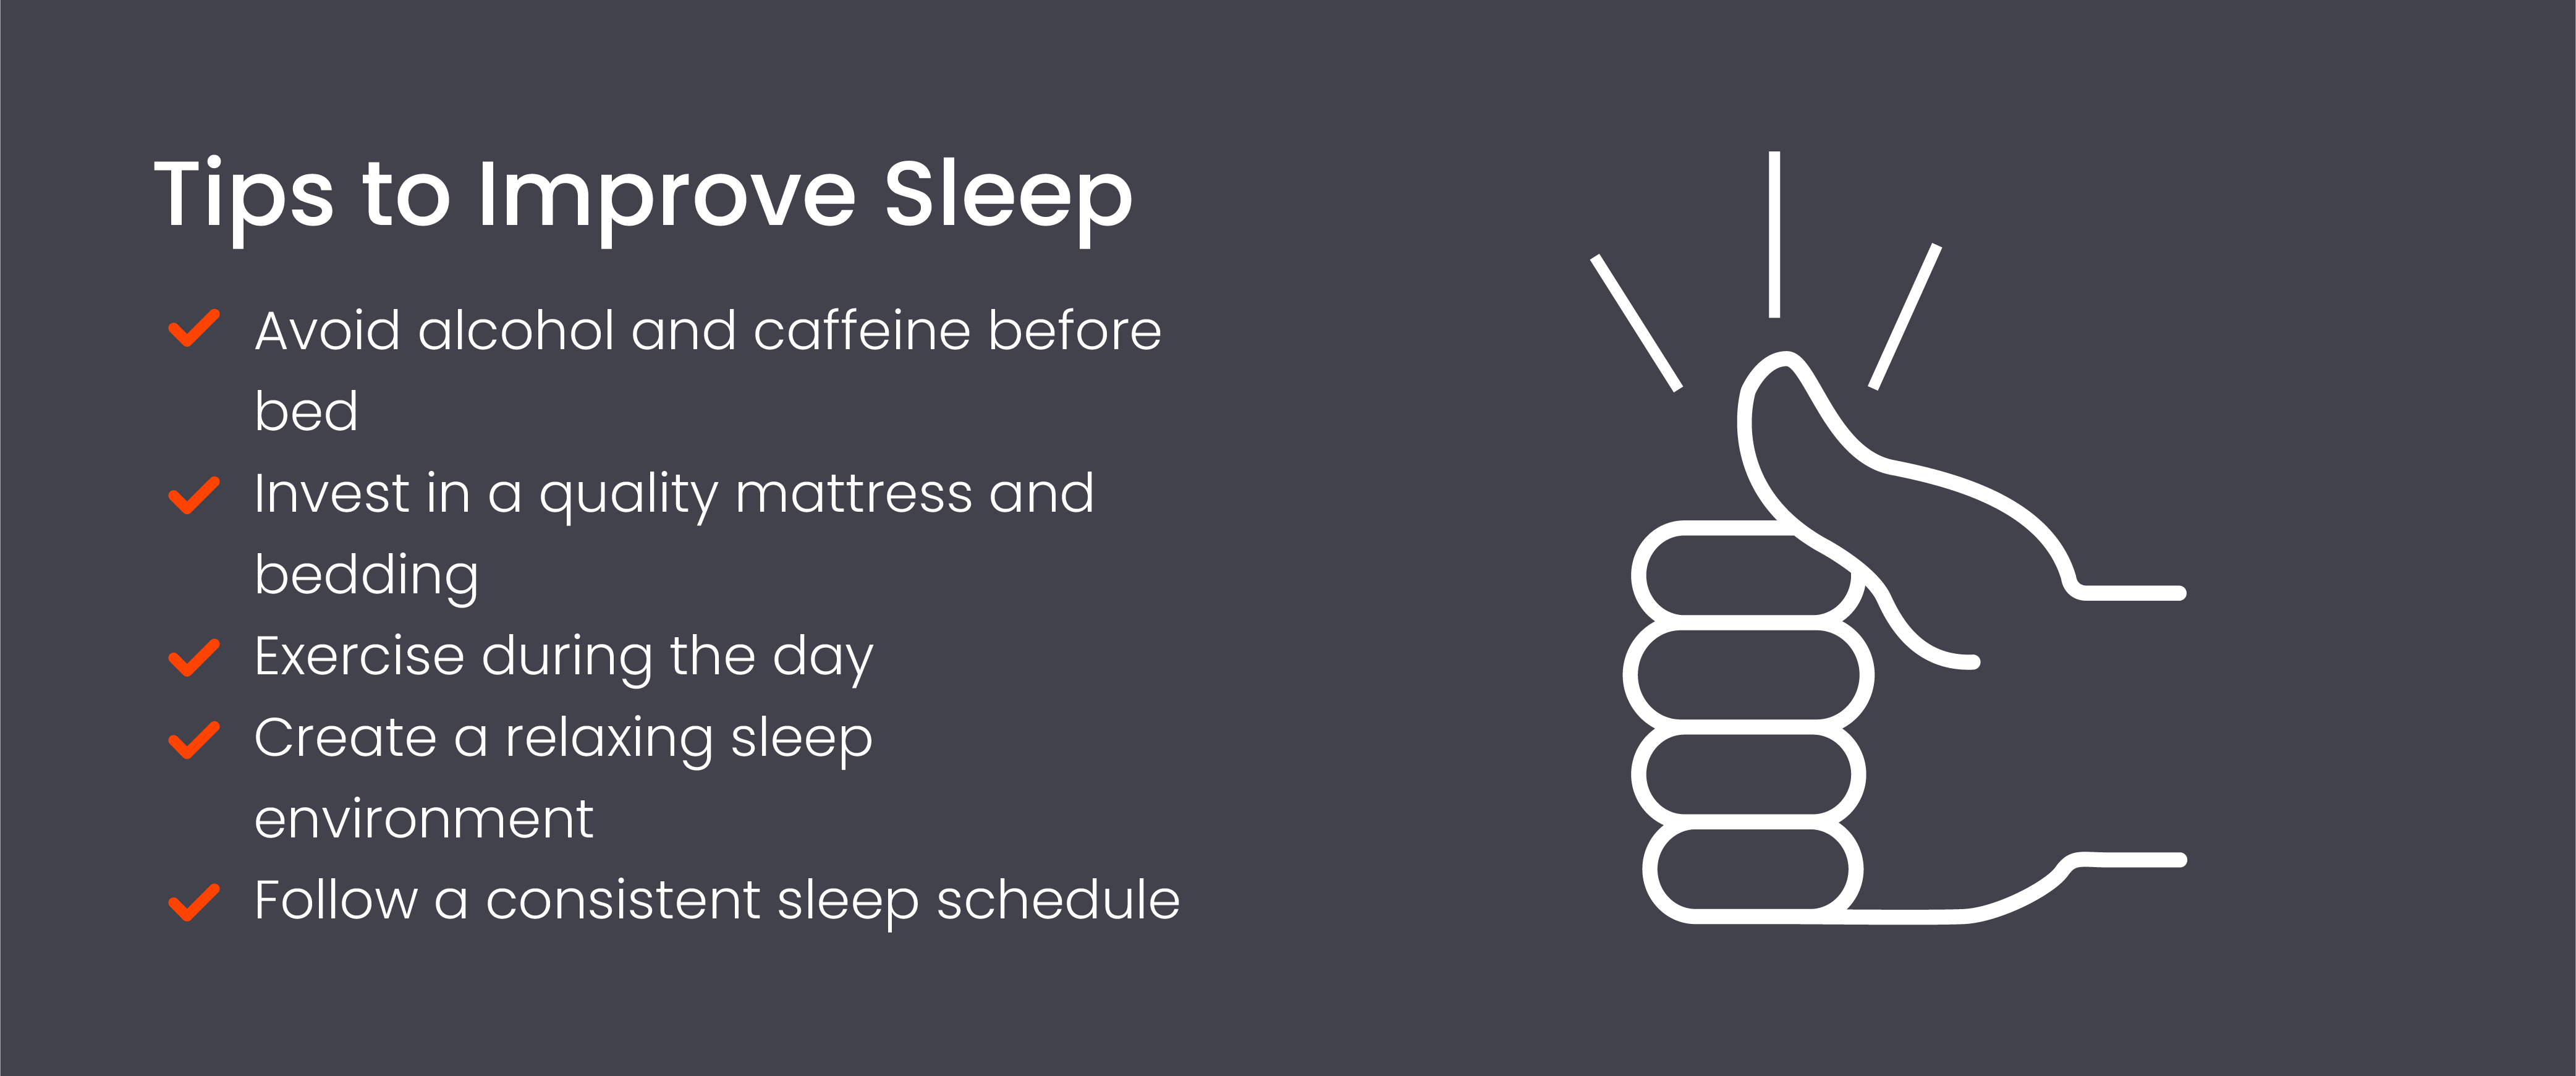 Tips to improve sleep